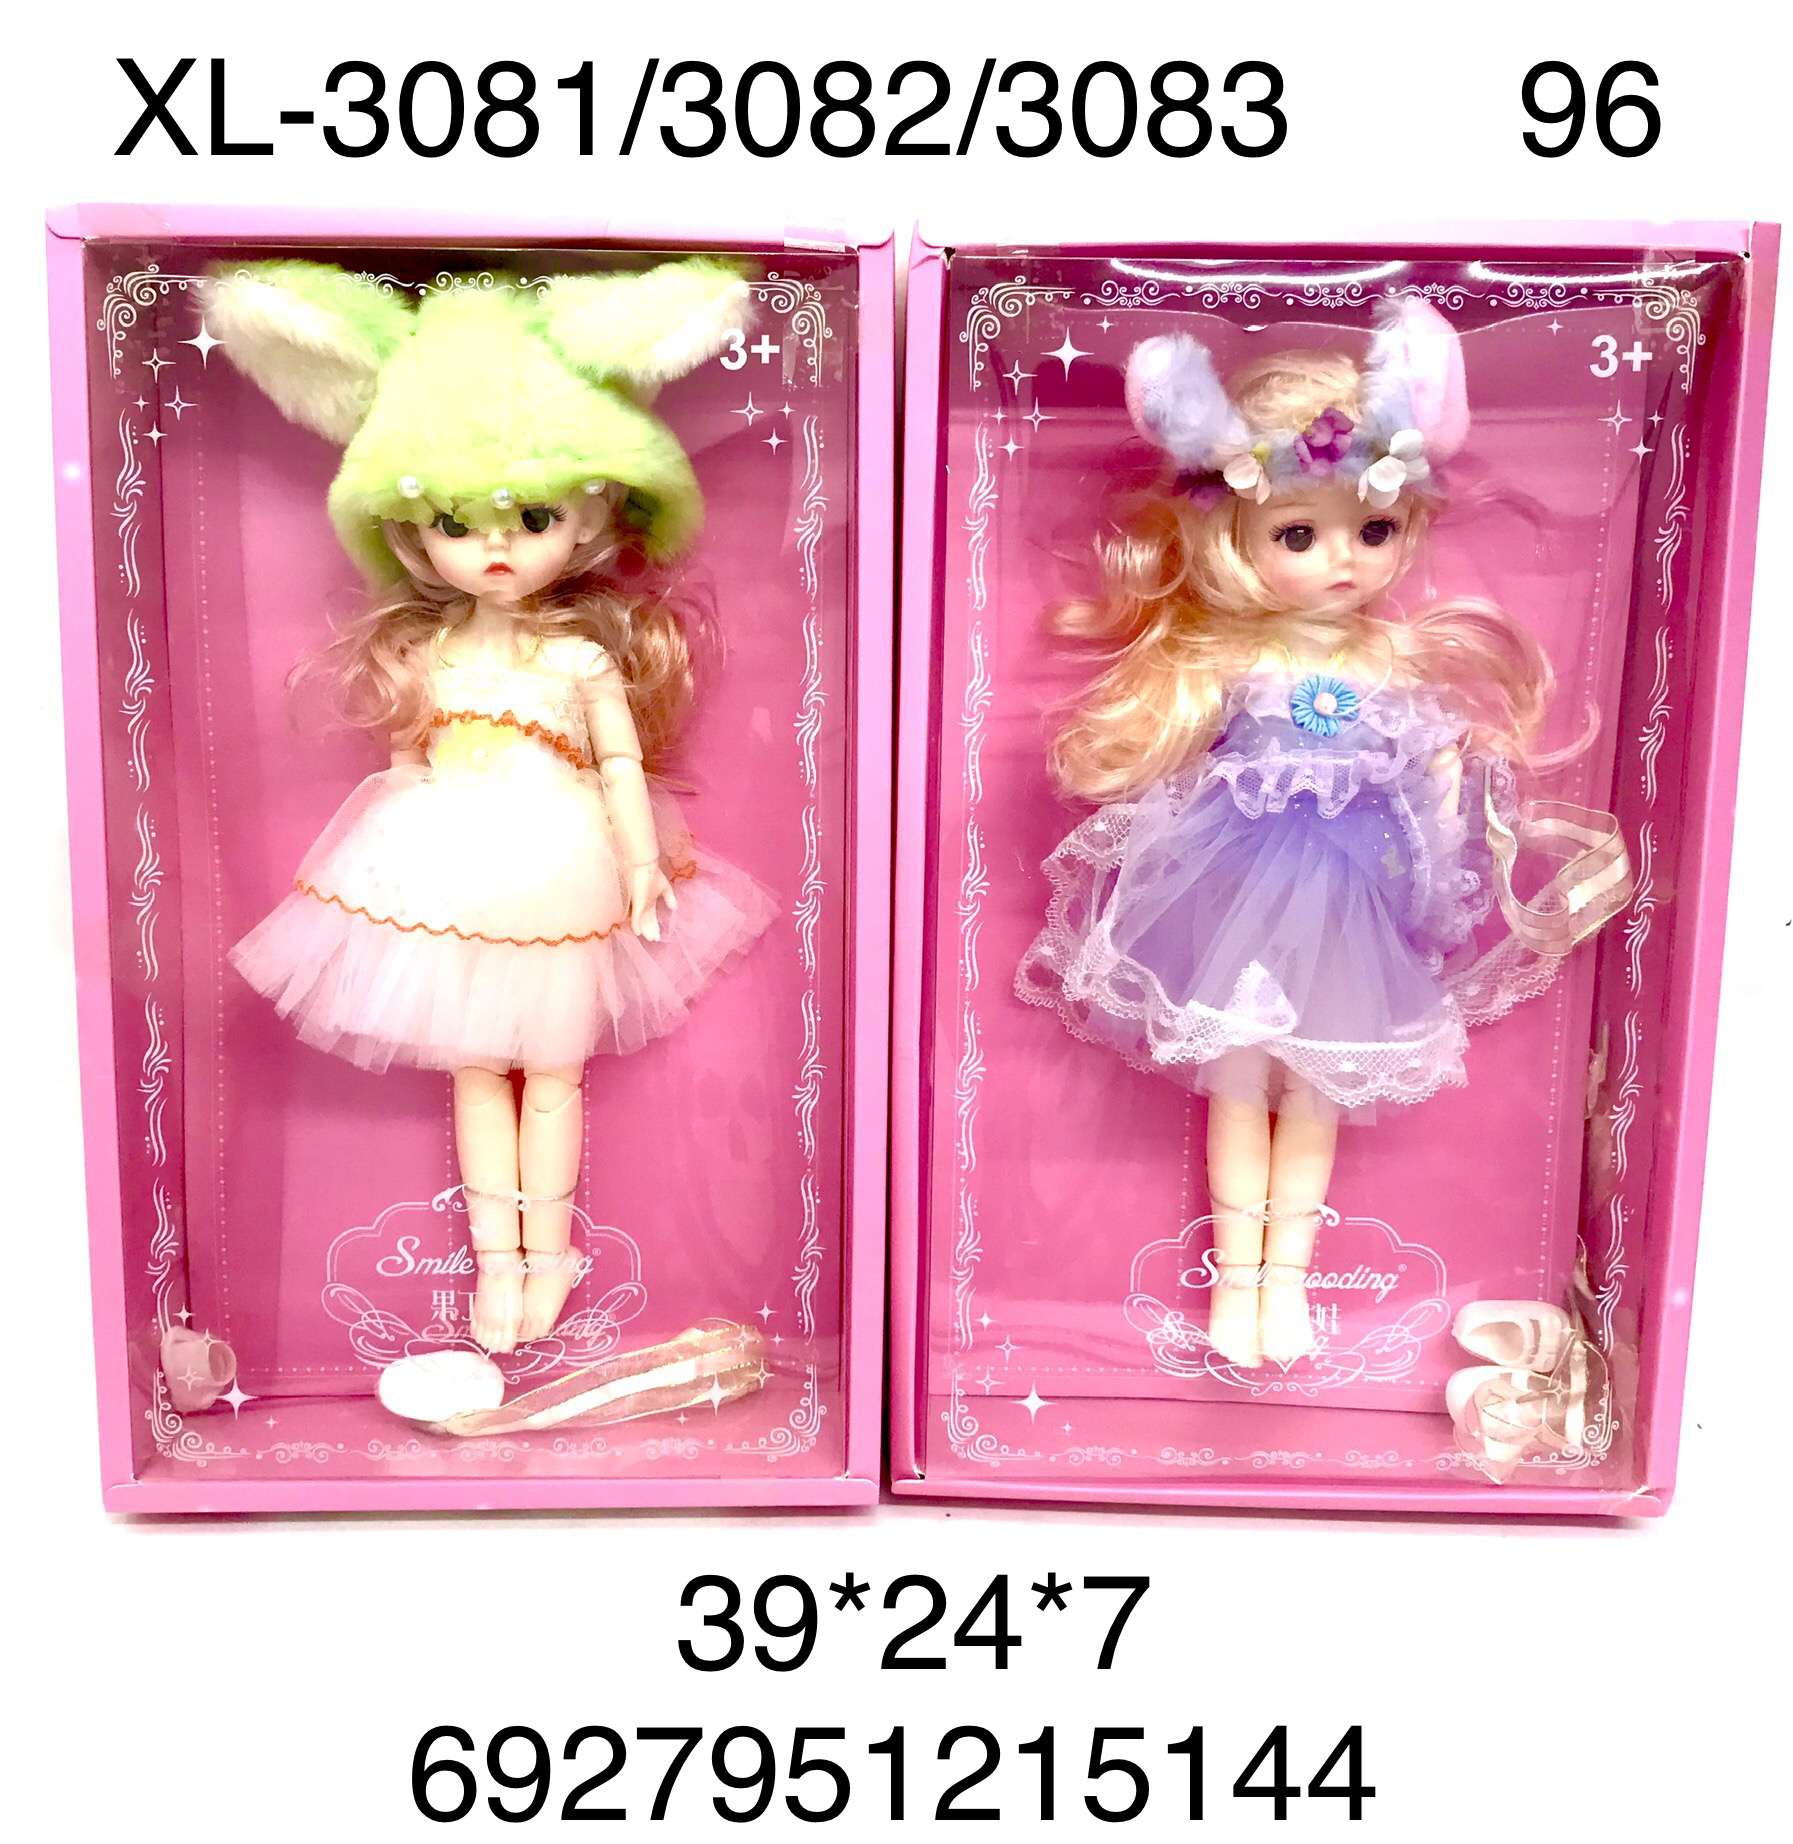 Кукла XL-3081/3082/3083 Smile в ассортименте - Саратов 